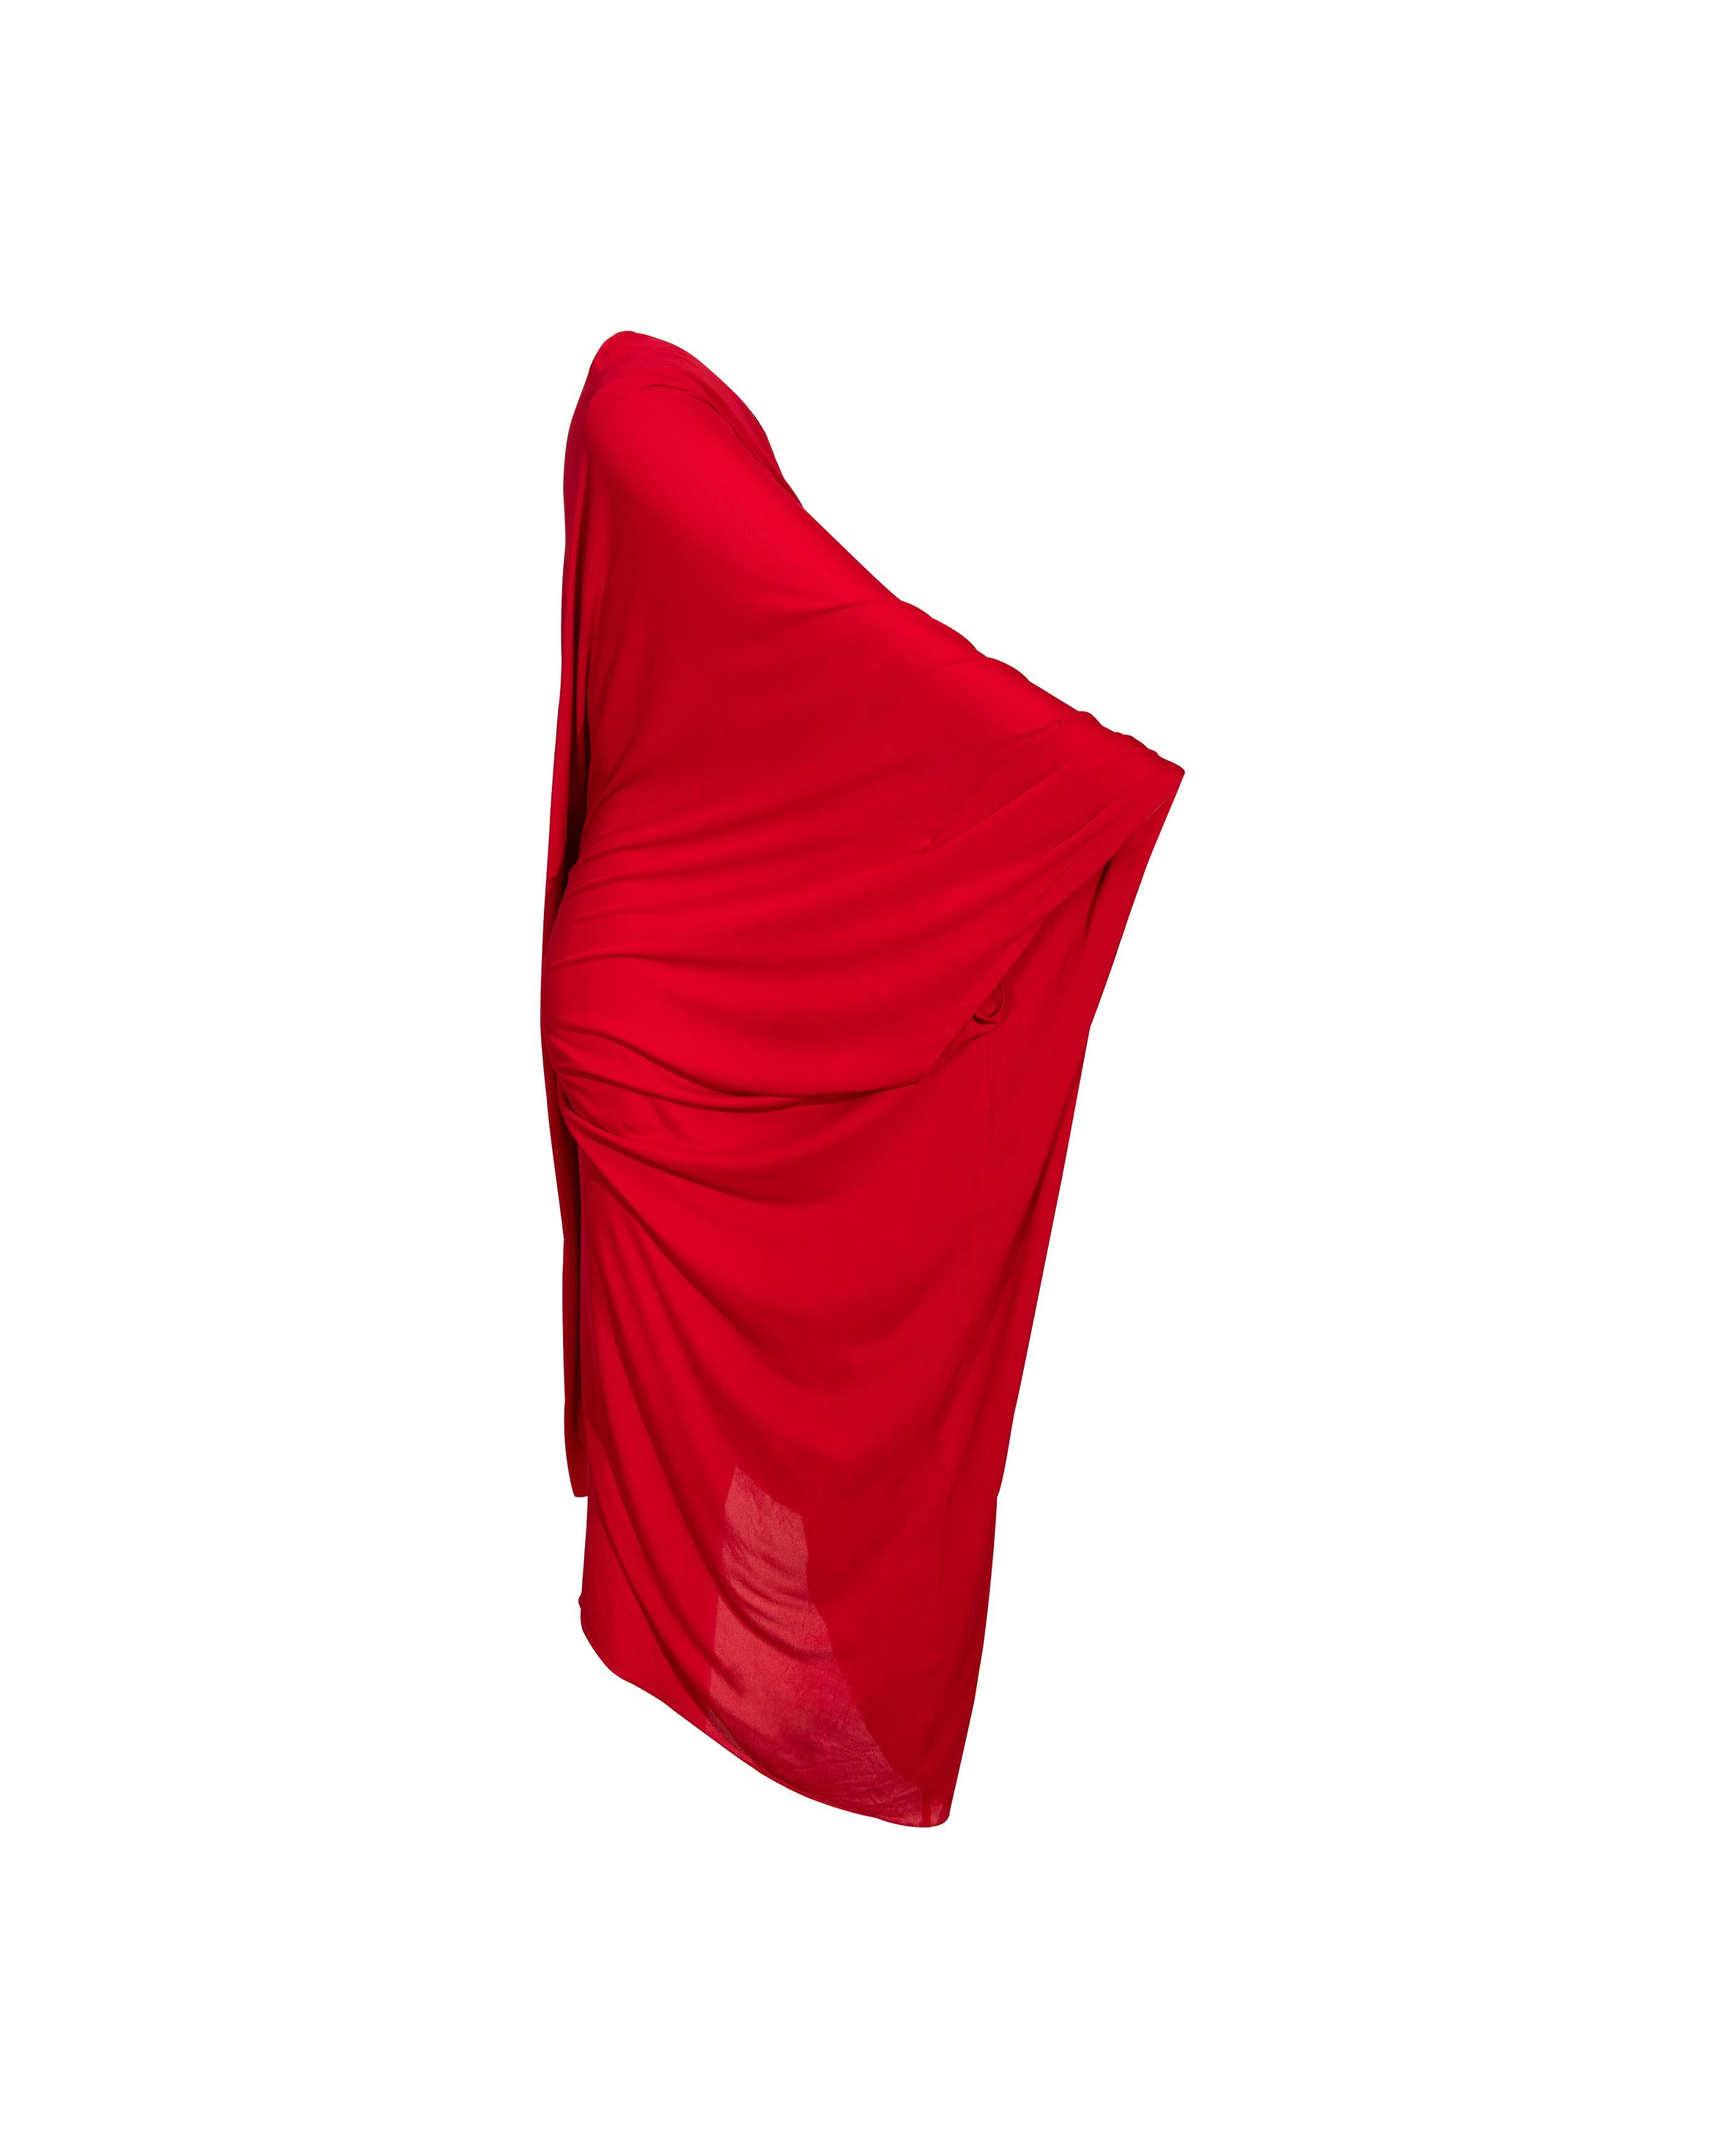 S/S 2009 Maison Martin Margiela Red Jersey Asymmetrical Drape Dress For Sale 4